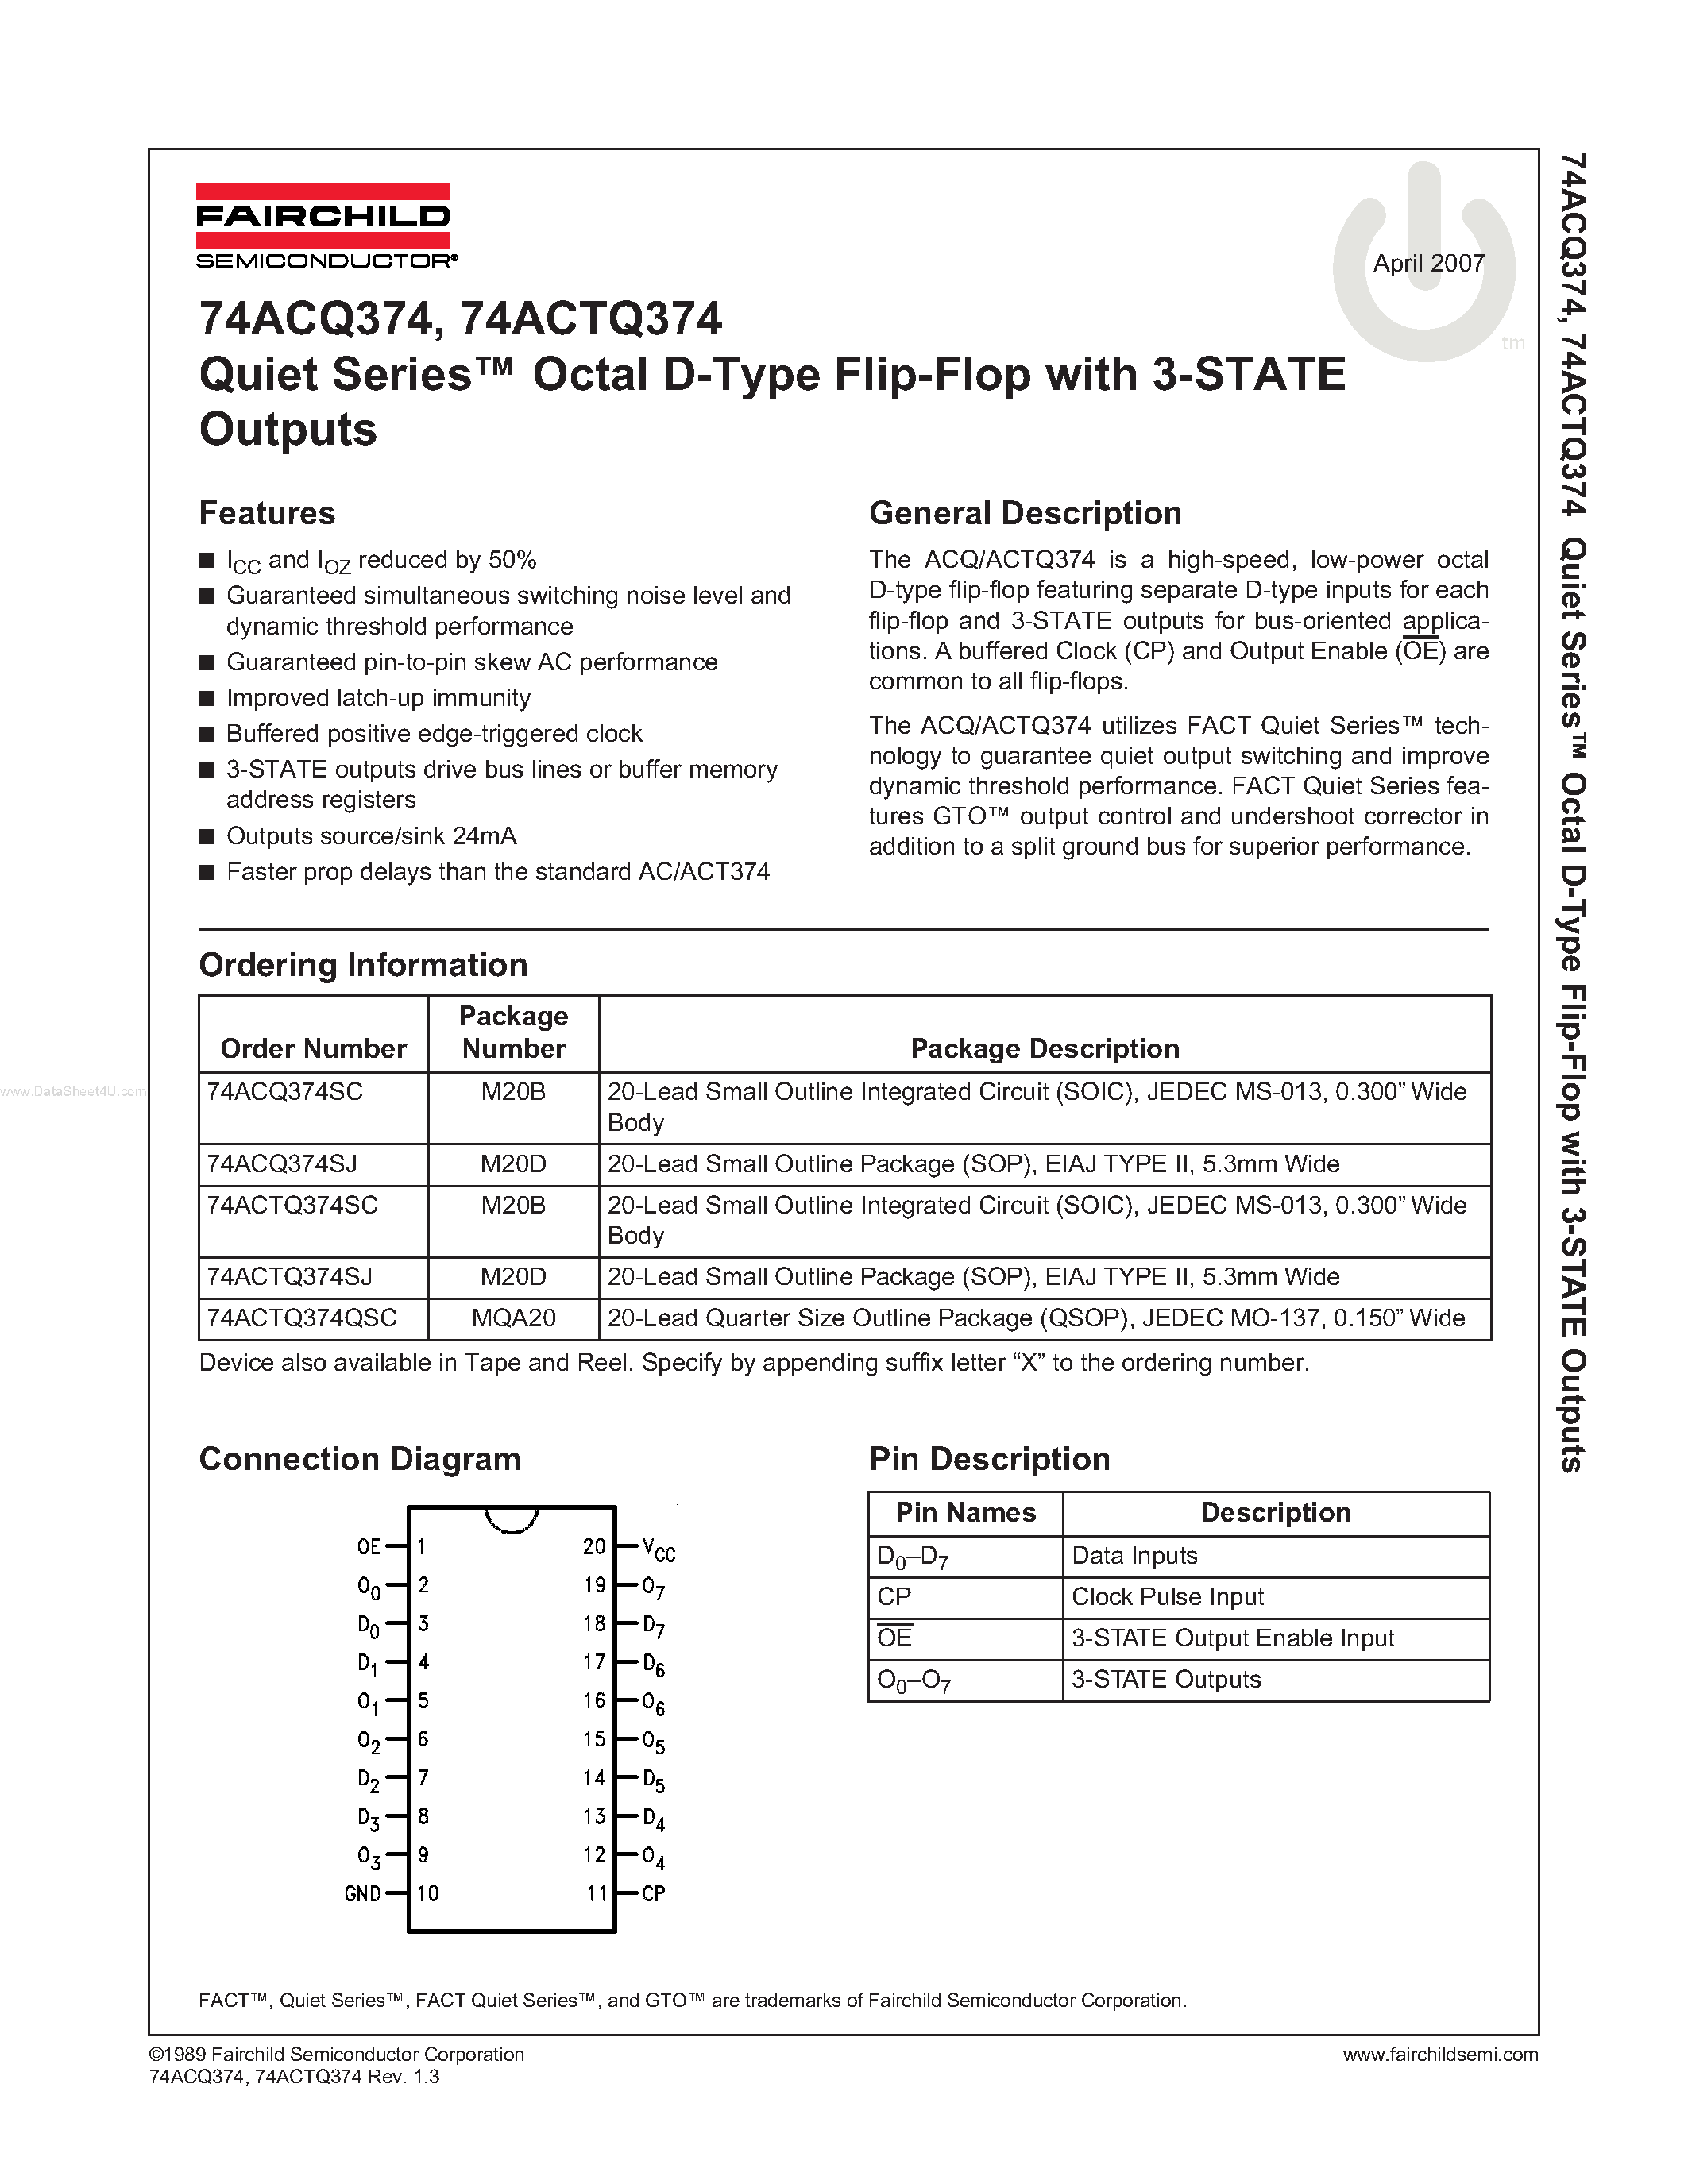 Даташит 74ACQ374SJ - Quiet Series Octal D-Type Flip-Flop with 3-STATE Outputs страница 1